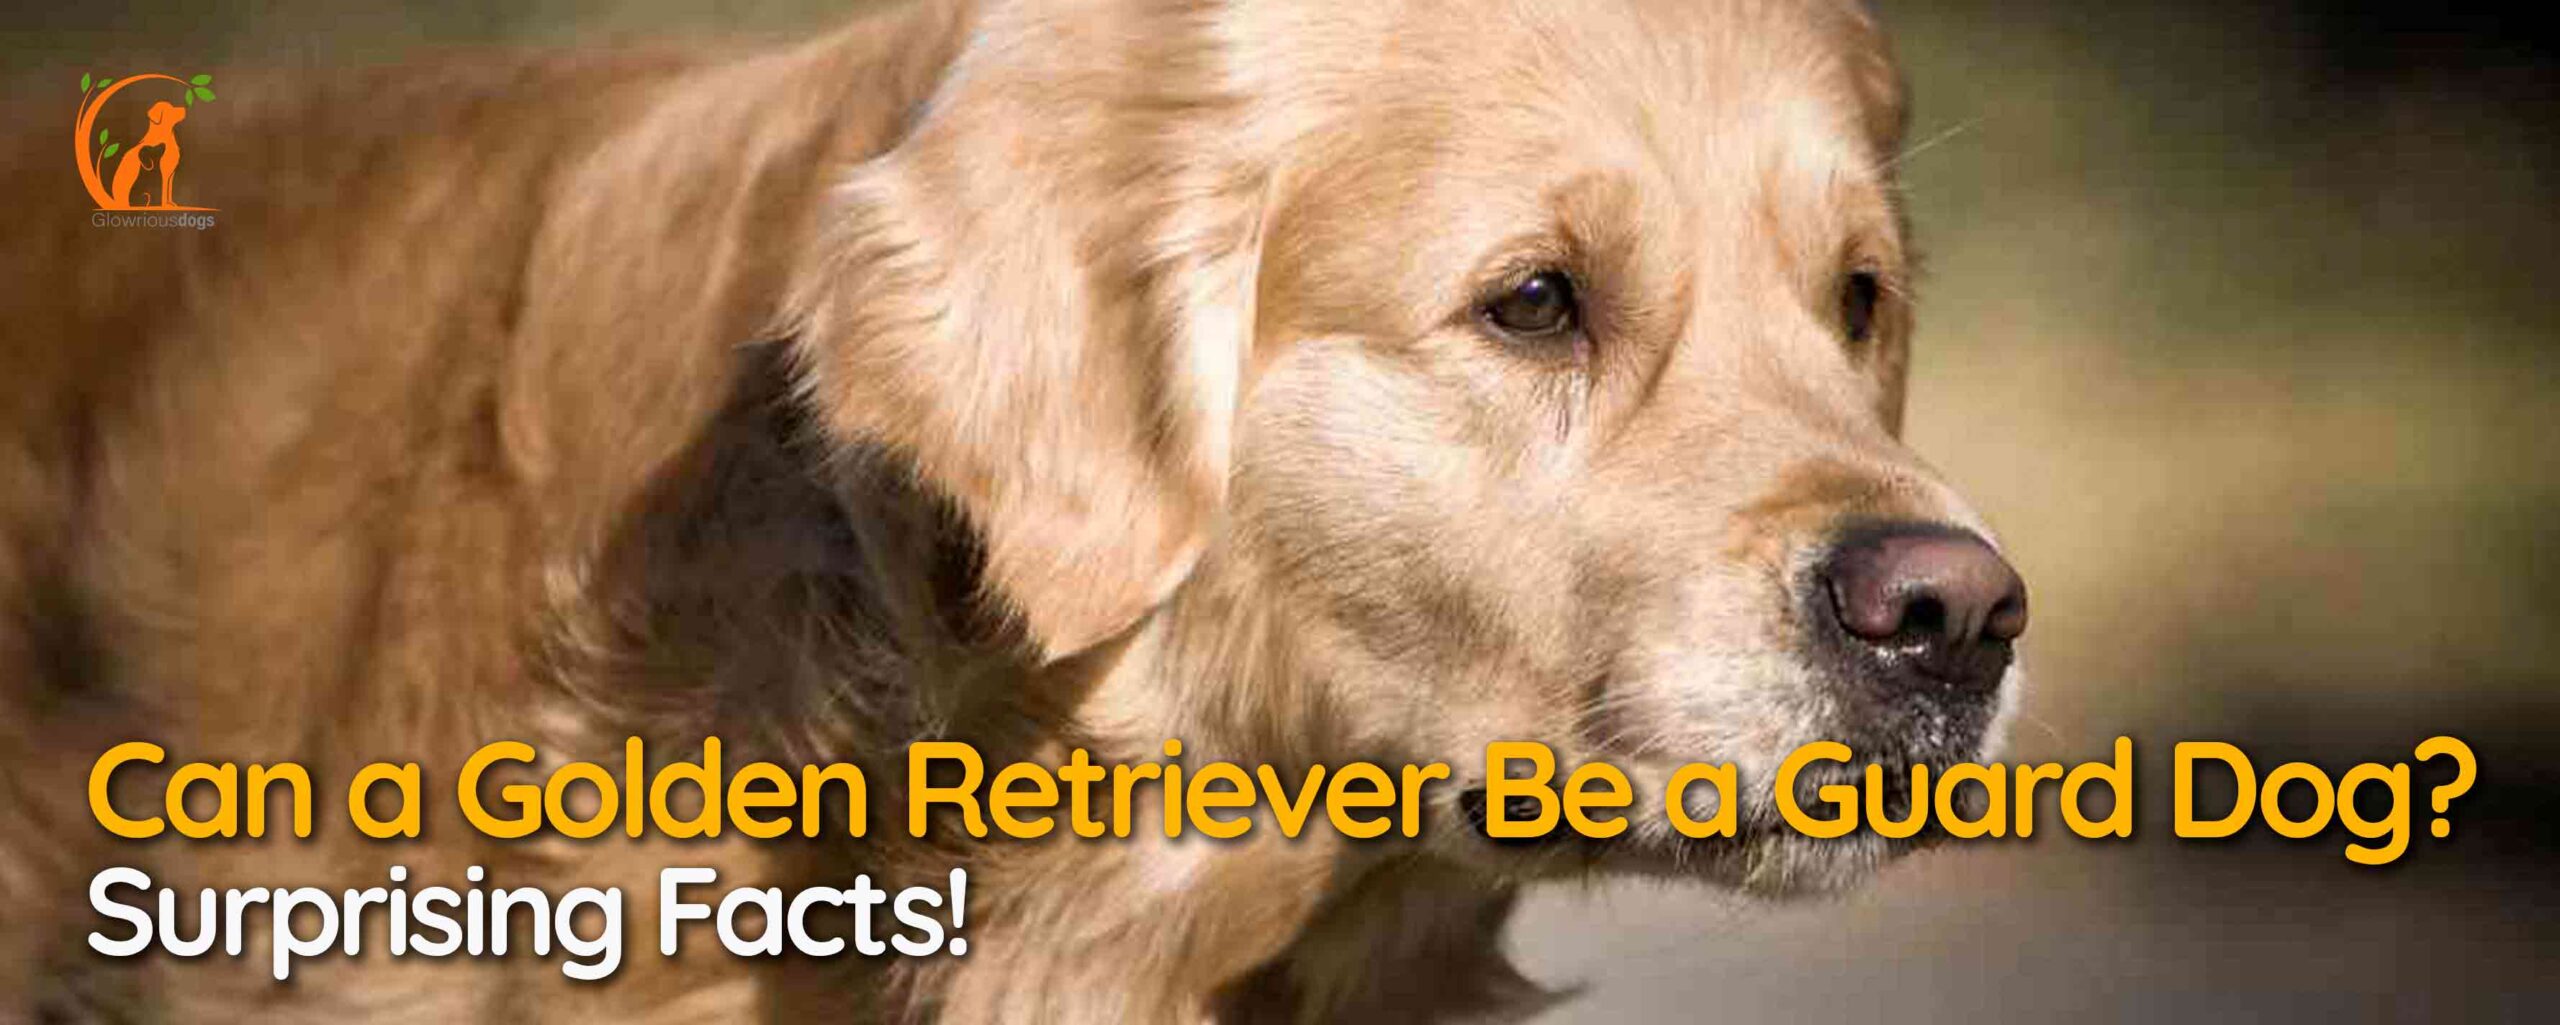 Can a Golden Retriever Be a Guard Dog? Surprising Facts!